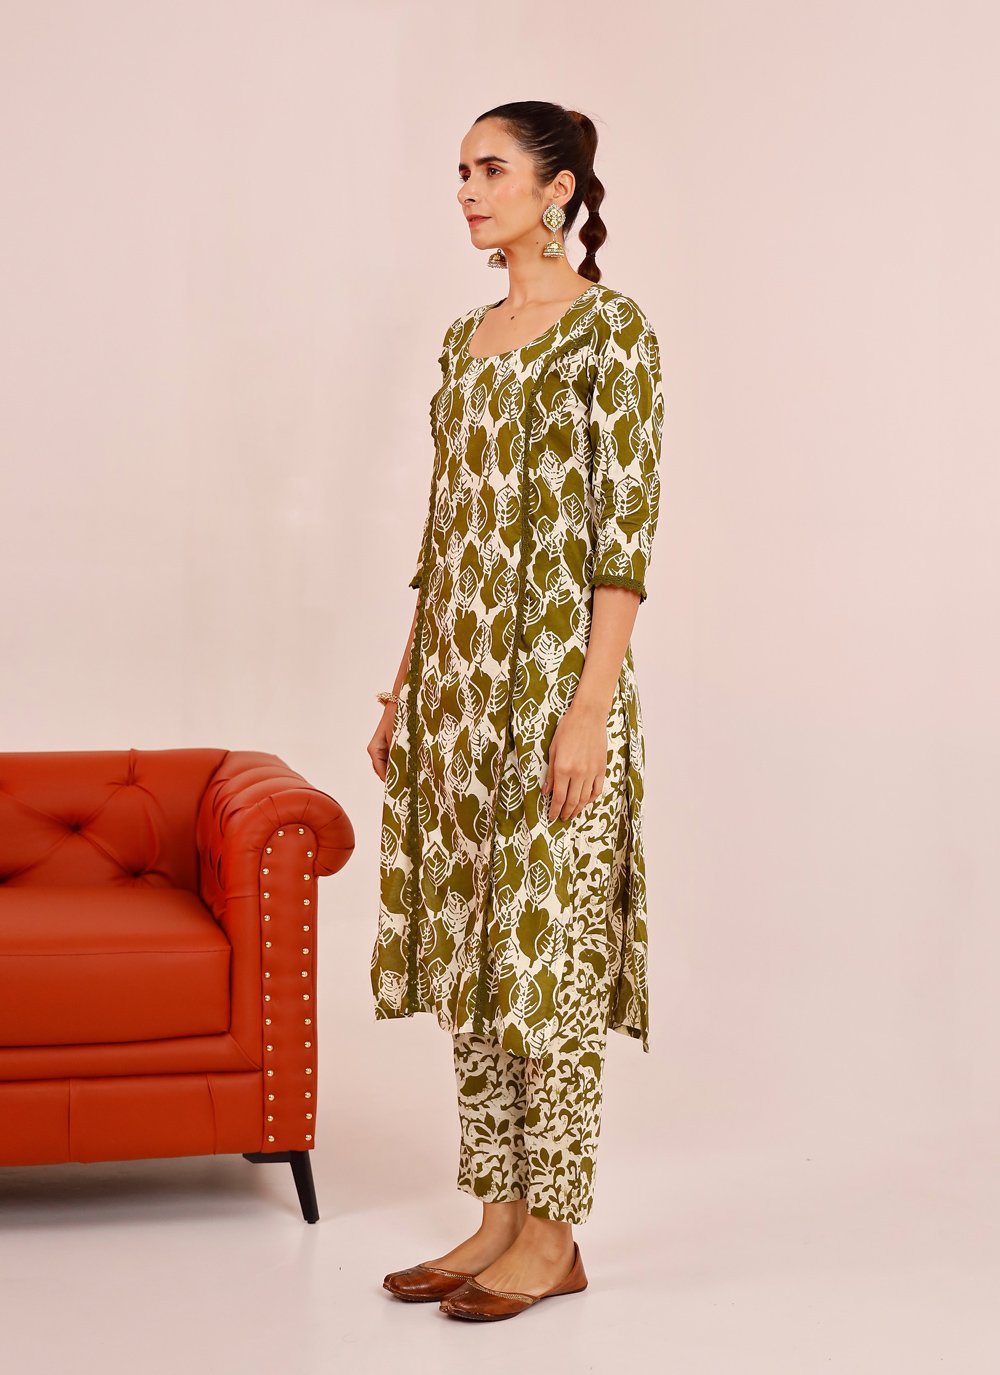 Pant Style Suit Cotton Green Print Salwar Kameez